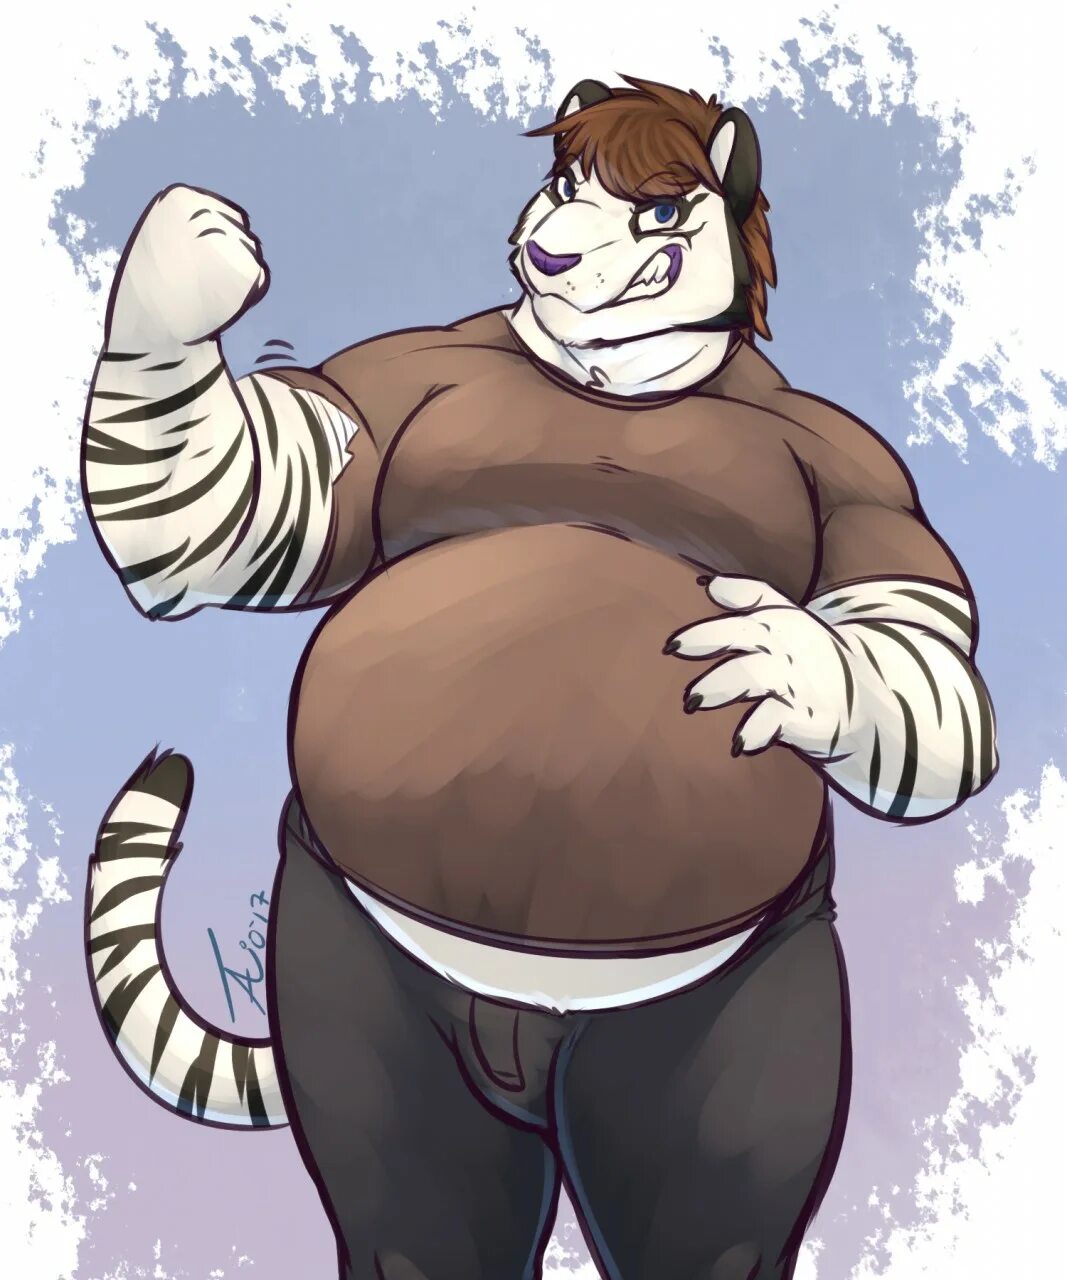 Furry big belly. Тигр инфлатион. Фэт Лионс. Furry жирные.